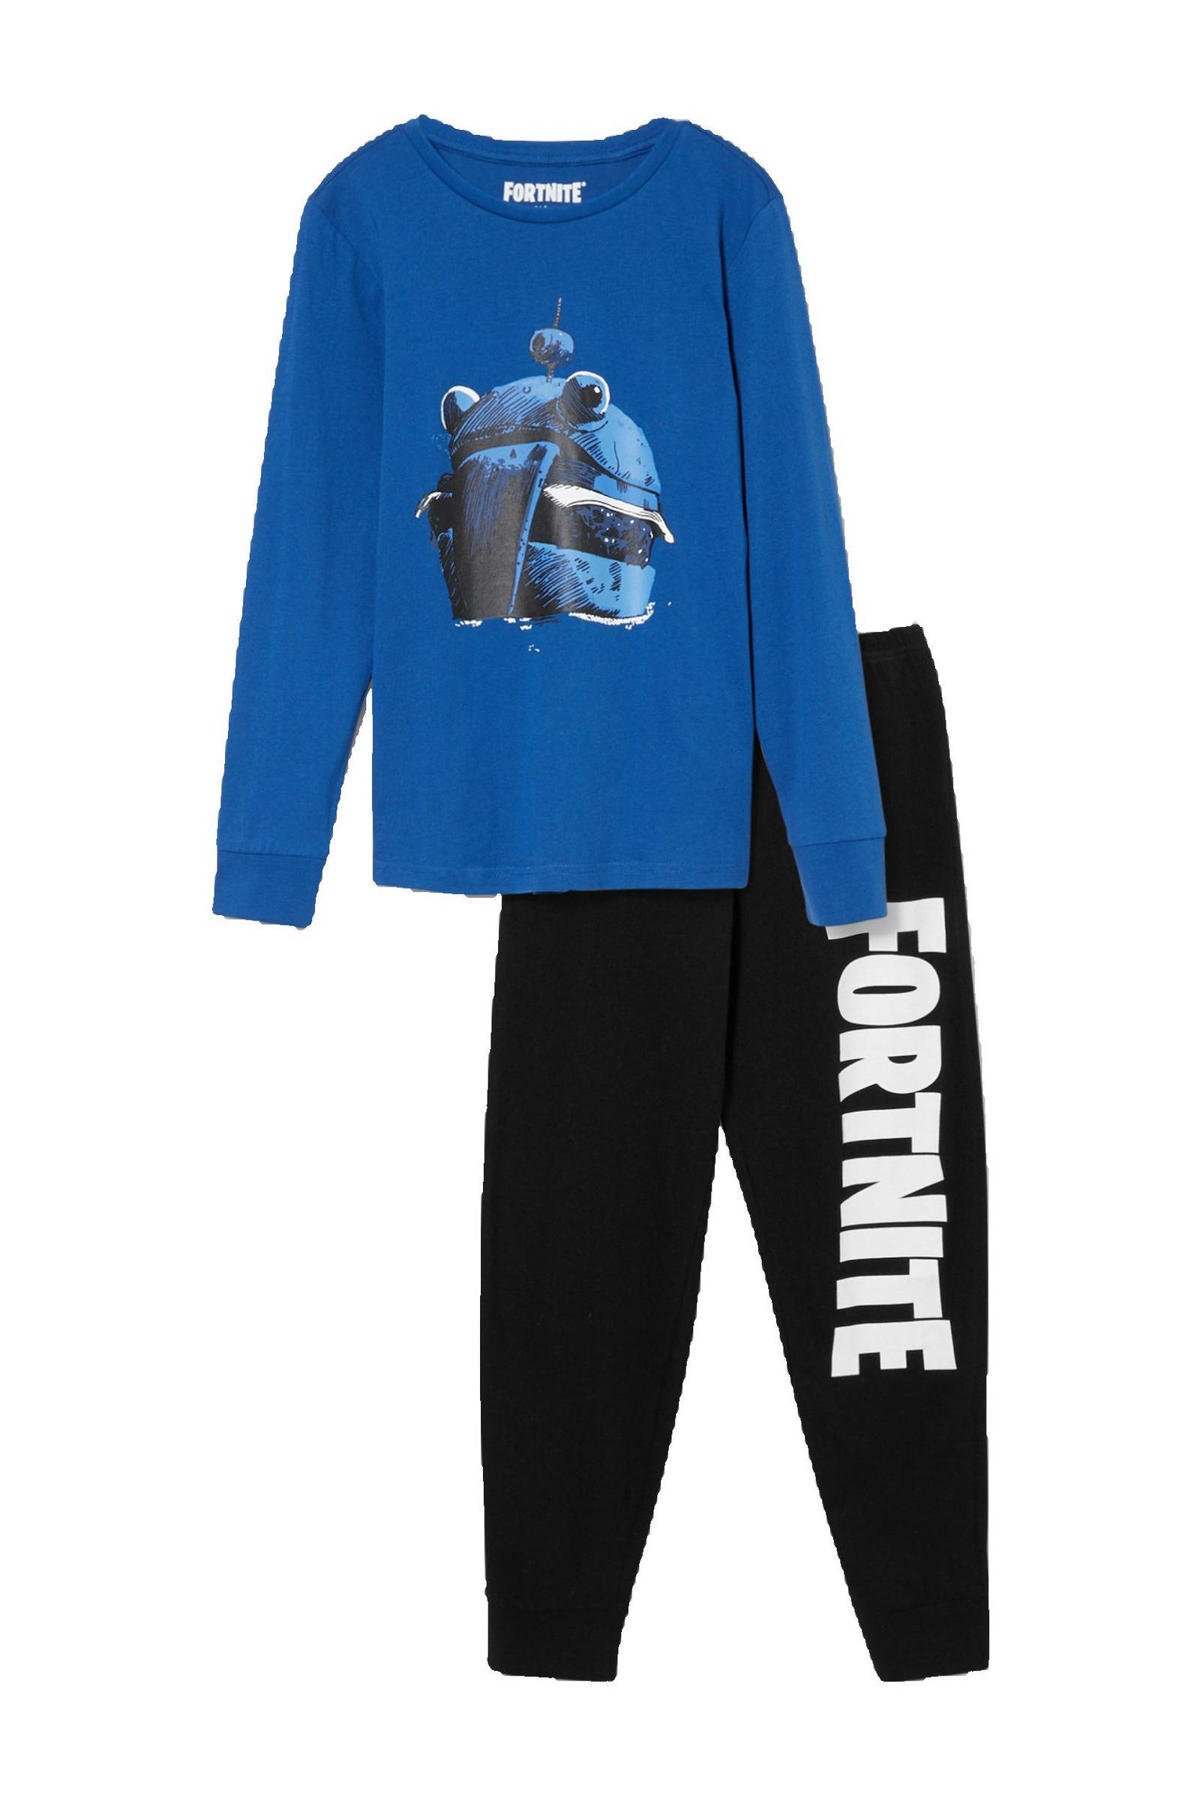 C&A Here & There pyjama Fortnite | wehkamp